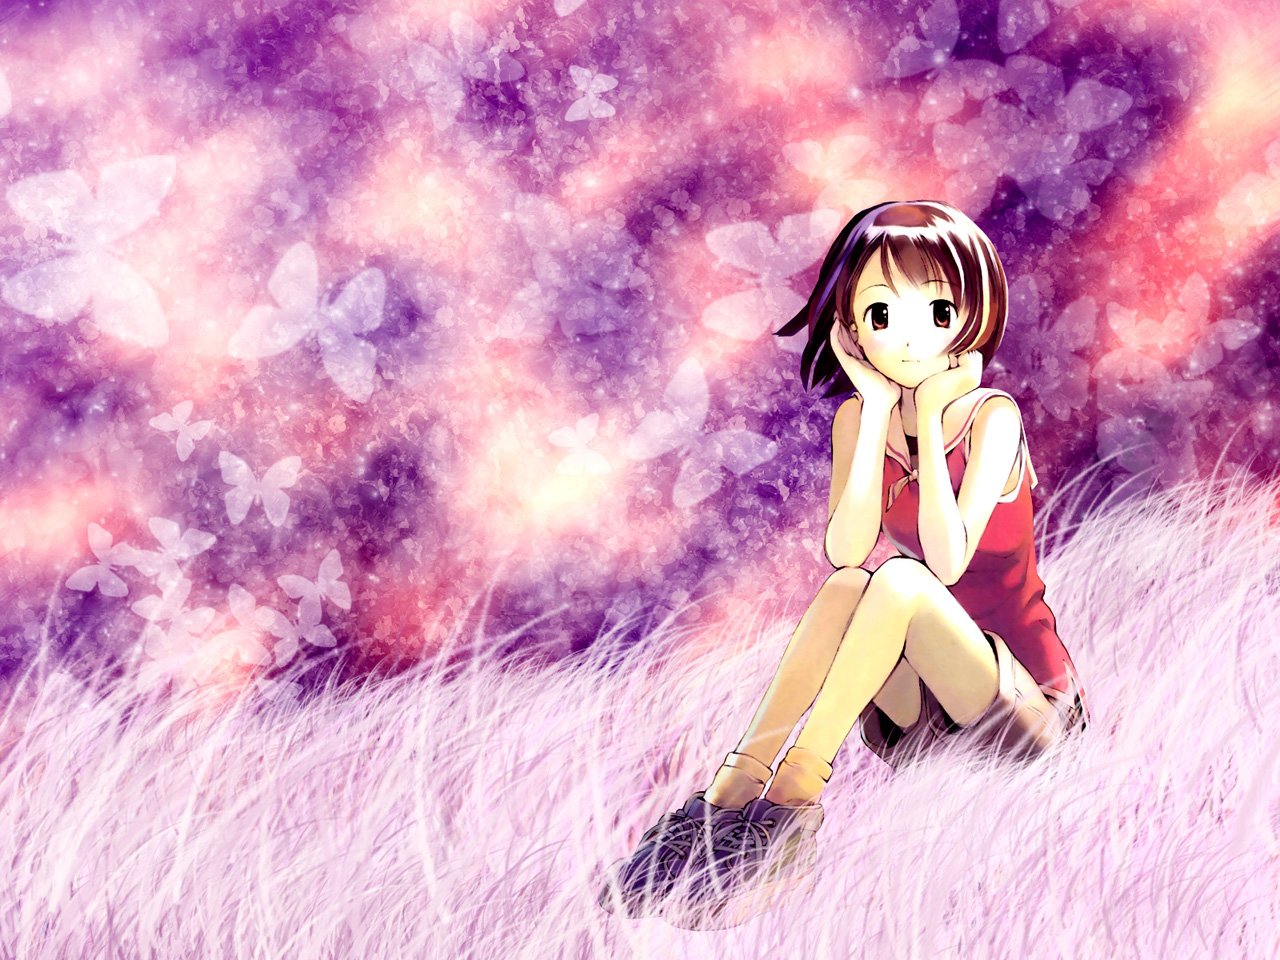 Wallpaper red top hot anime girl original desktop wallpaper hd image  picture background 7d1399  wallpapersmug